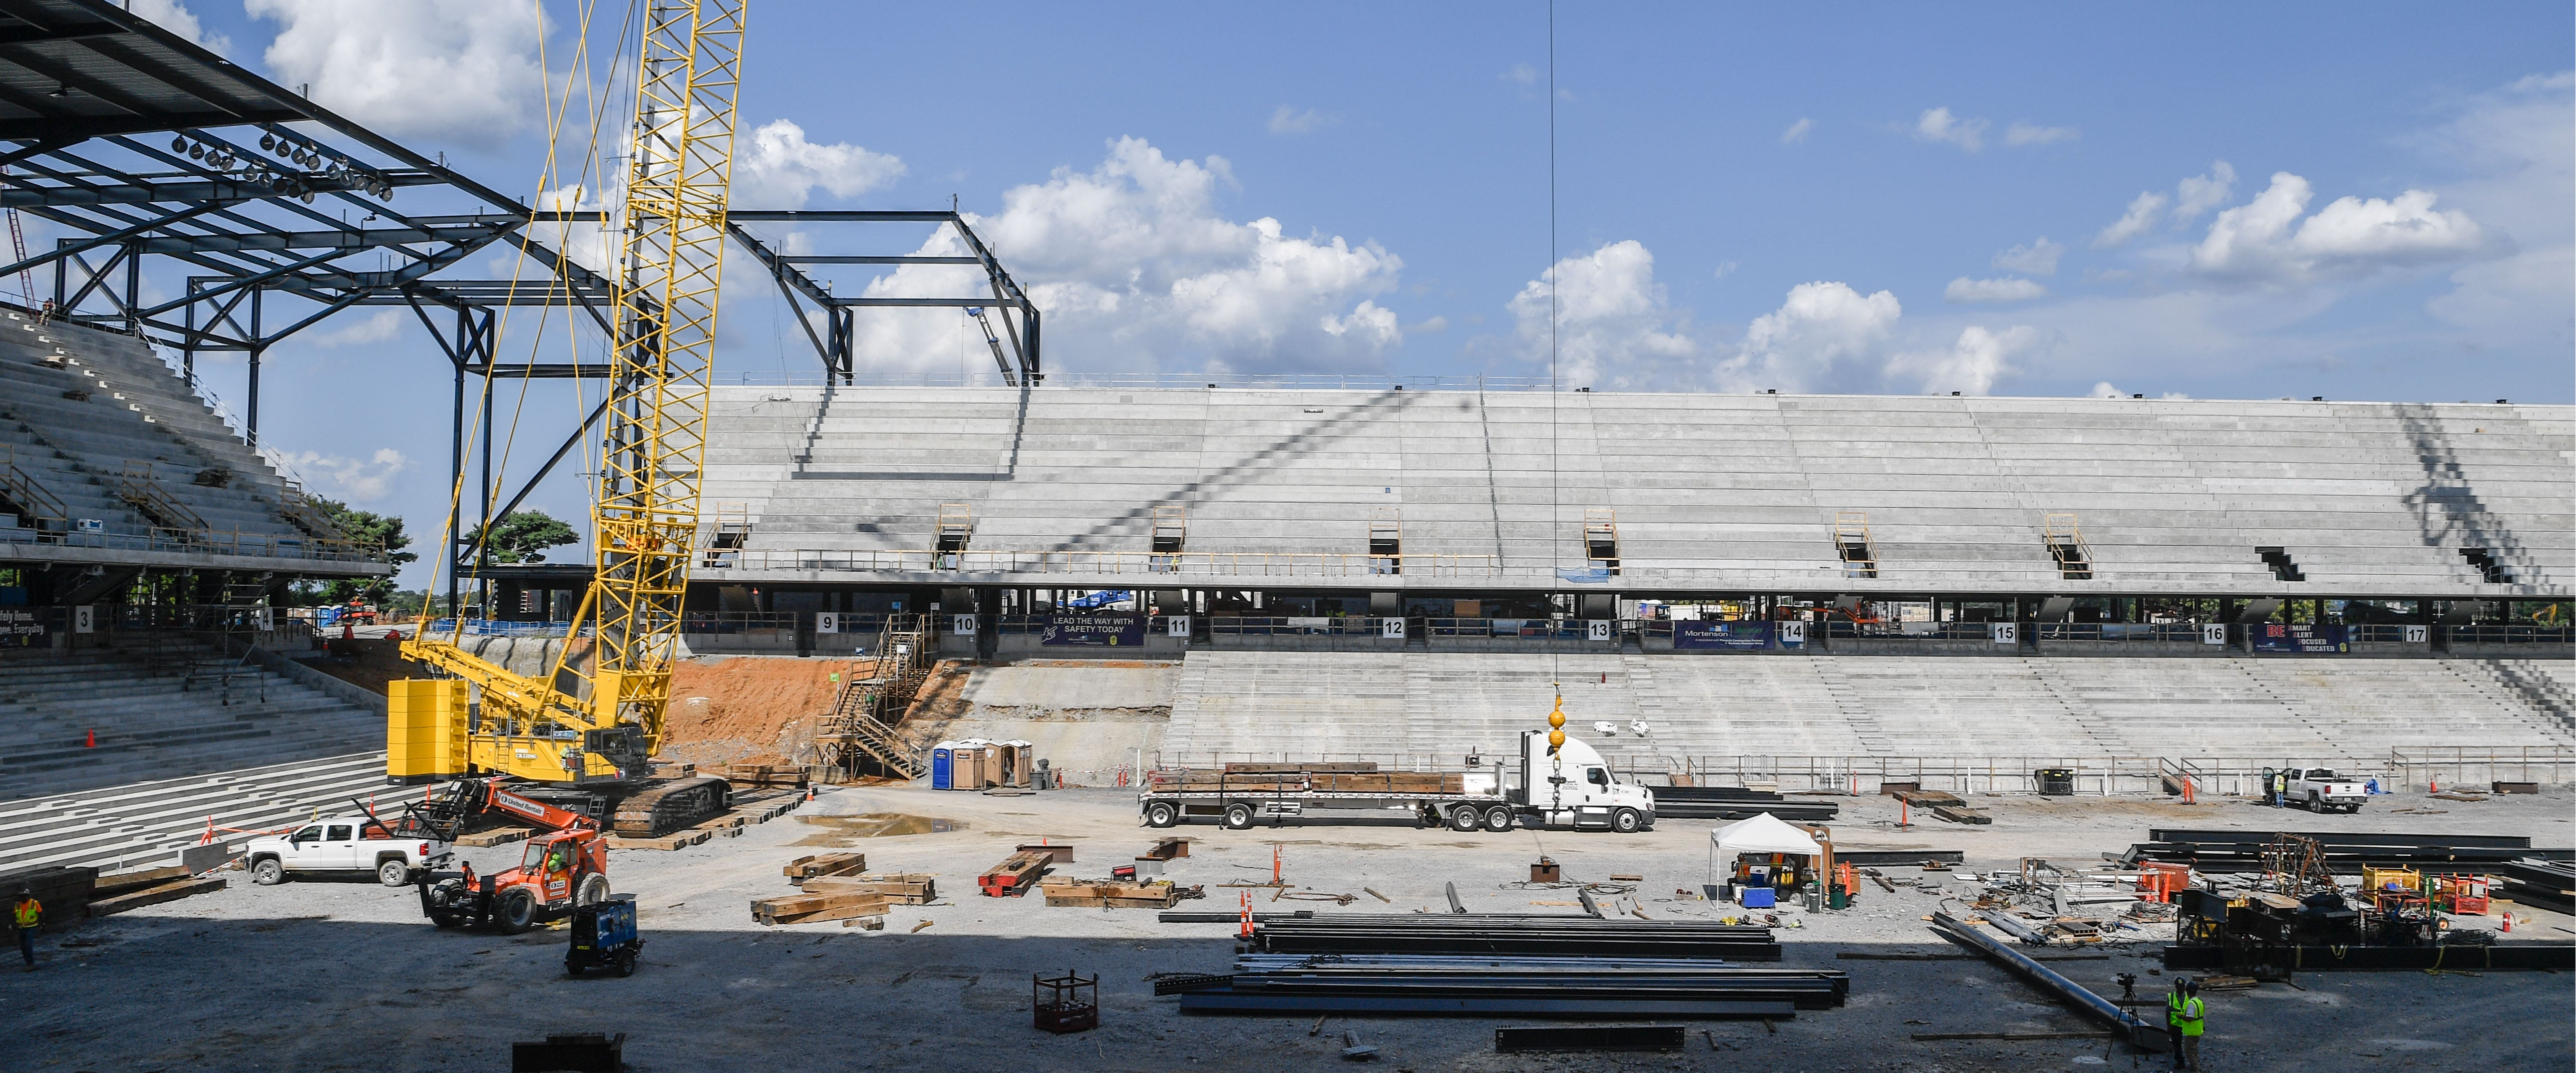 Great news regarding Nashville SC's stadium opening!